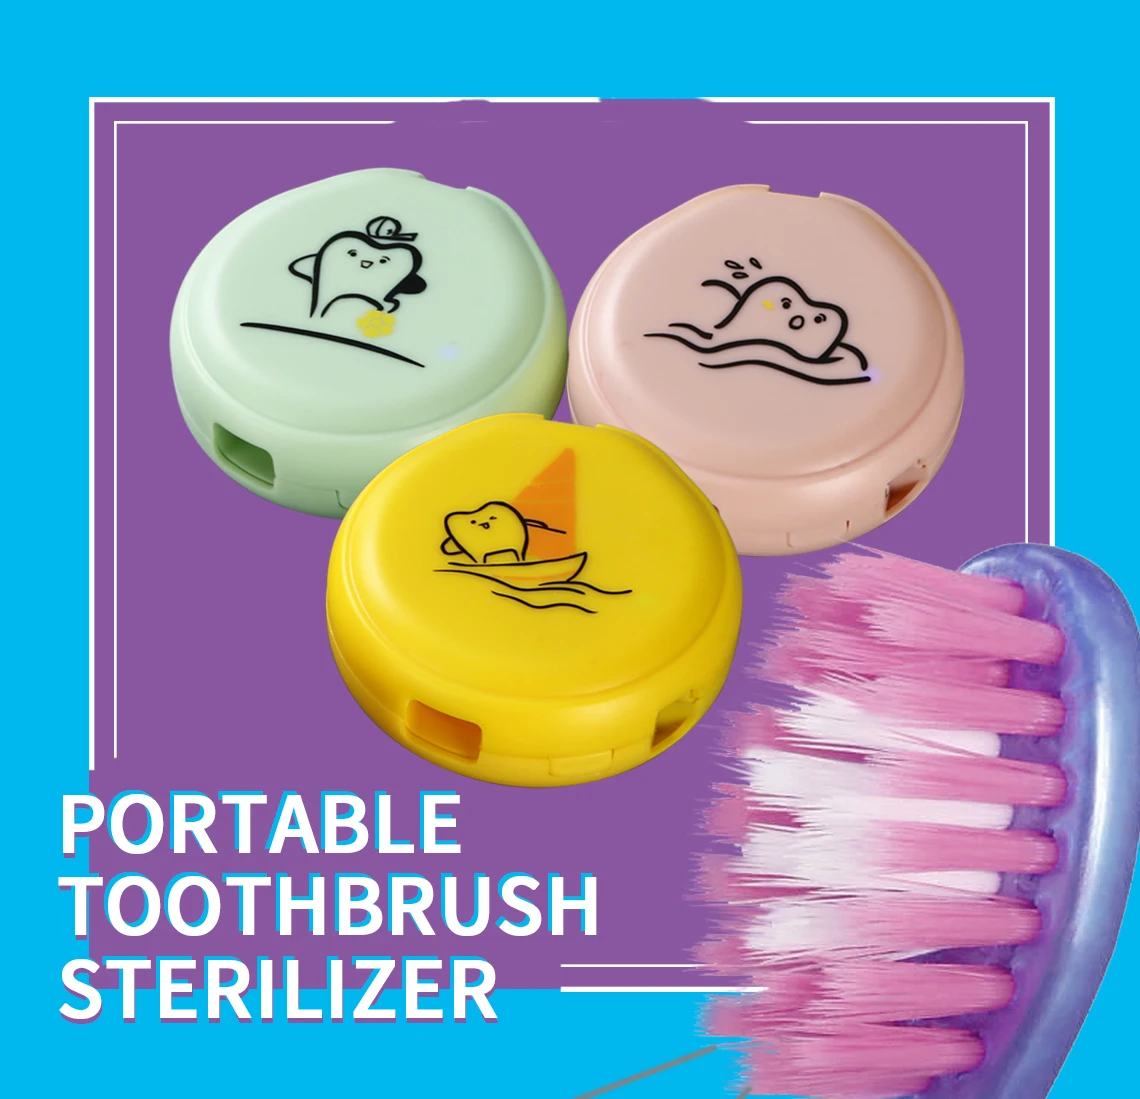 Toothbrush sterilization box